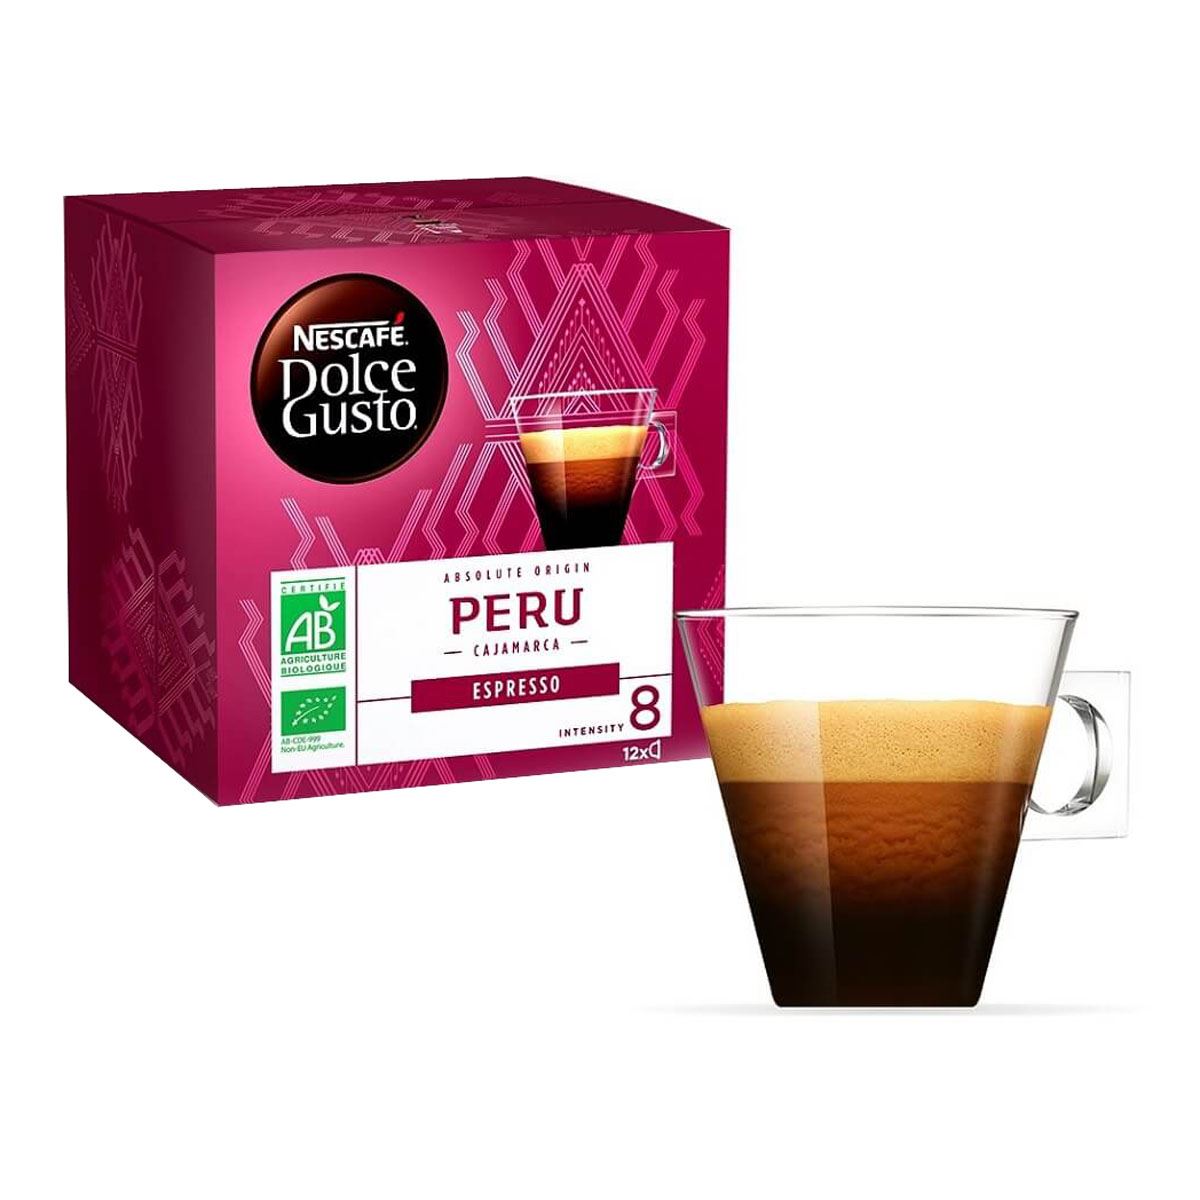 NESCAFÉ® Dolce Gusto Espresso Perú caja 12 cápsulas